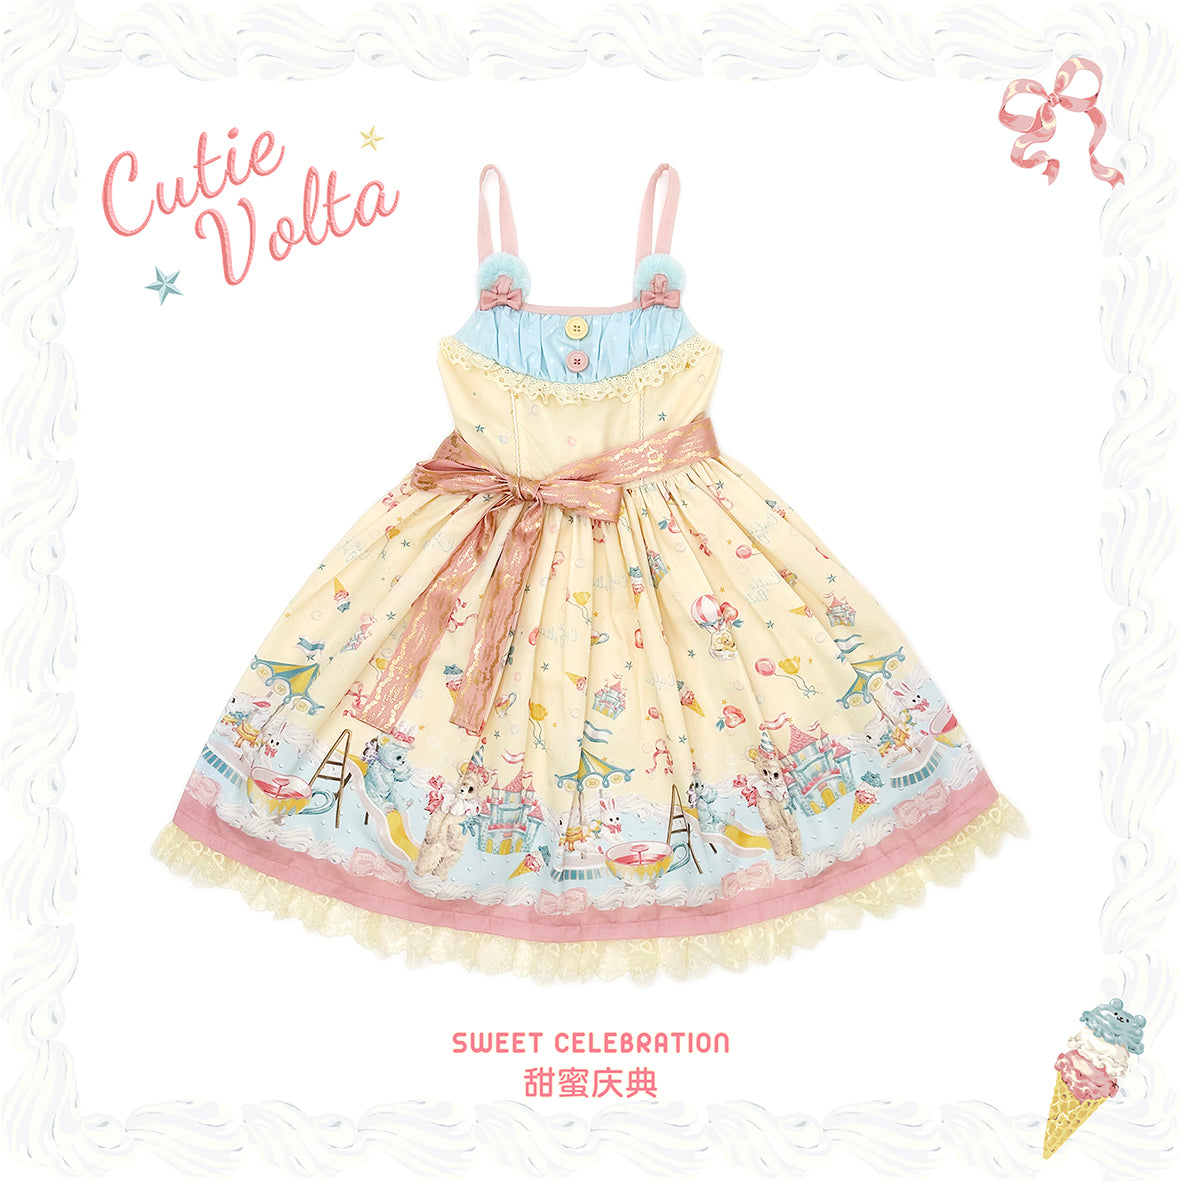 (BFM)Cutie Volta~Sweet Celebration~Sweet Lolita OP Dress Bunny Bear JSK Salopette Size #1 Cream Color-JSK 